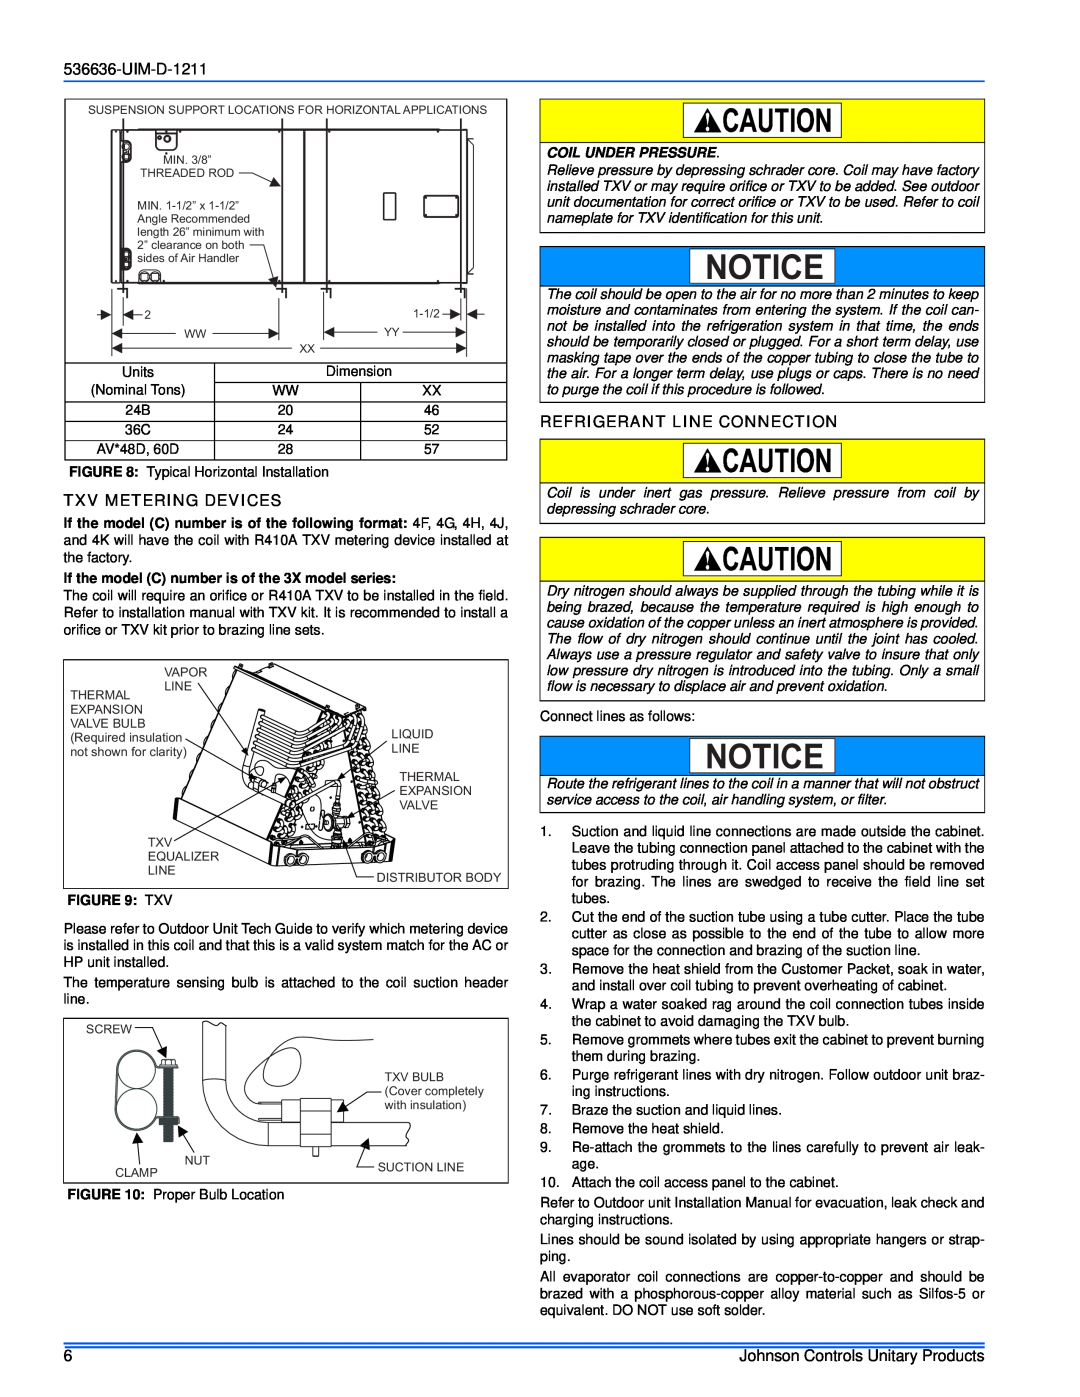 Johnson Controls AV*(C) Series Txv Metering Devices, Refrigerant Line Connection, UIM-D-1211, Coil Under Pressure 